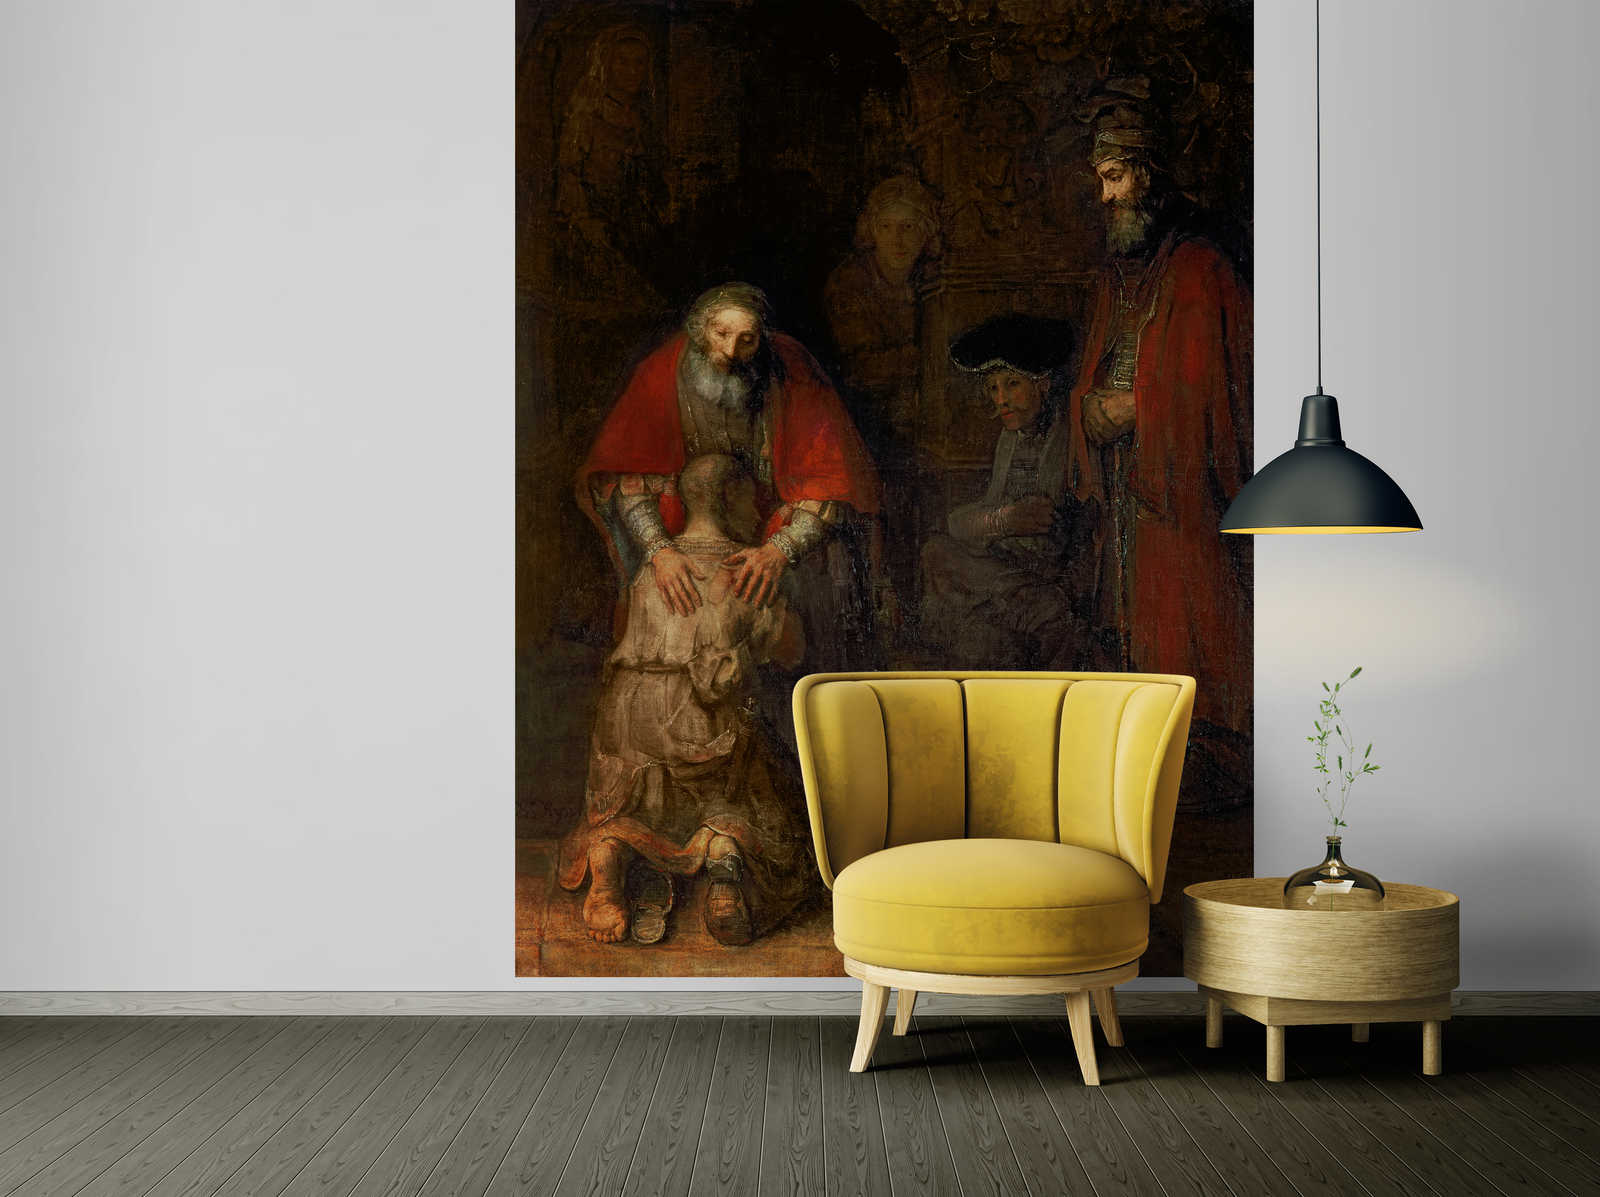             Photo wallpaper "Return of the prodigal sonum" by Rembrandt van Rijn
        